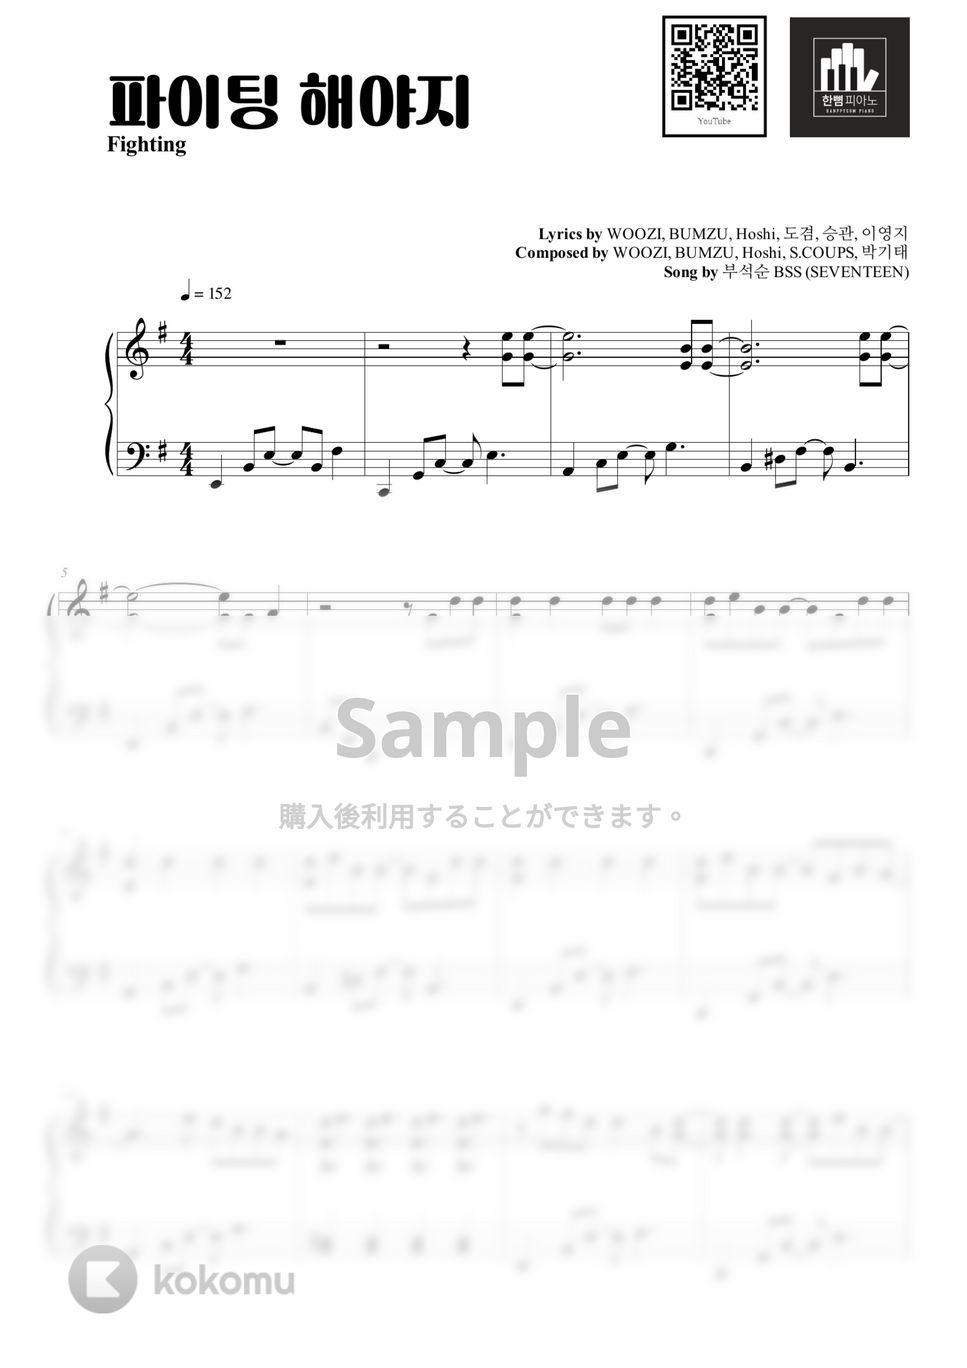 BSS (SEVENTEEN) - Fighting(파이팅 해야지) (PIANO COVER) by HANPPYEOMPIANO